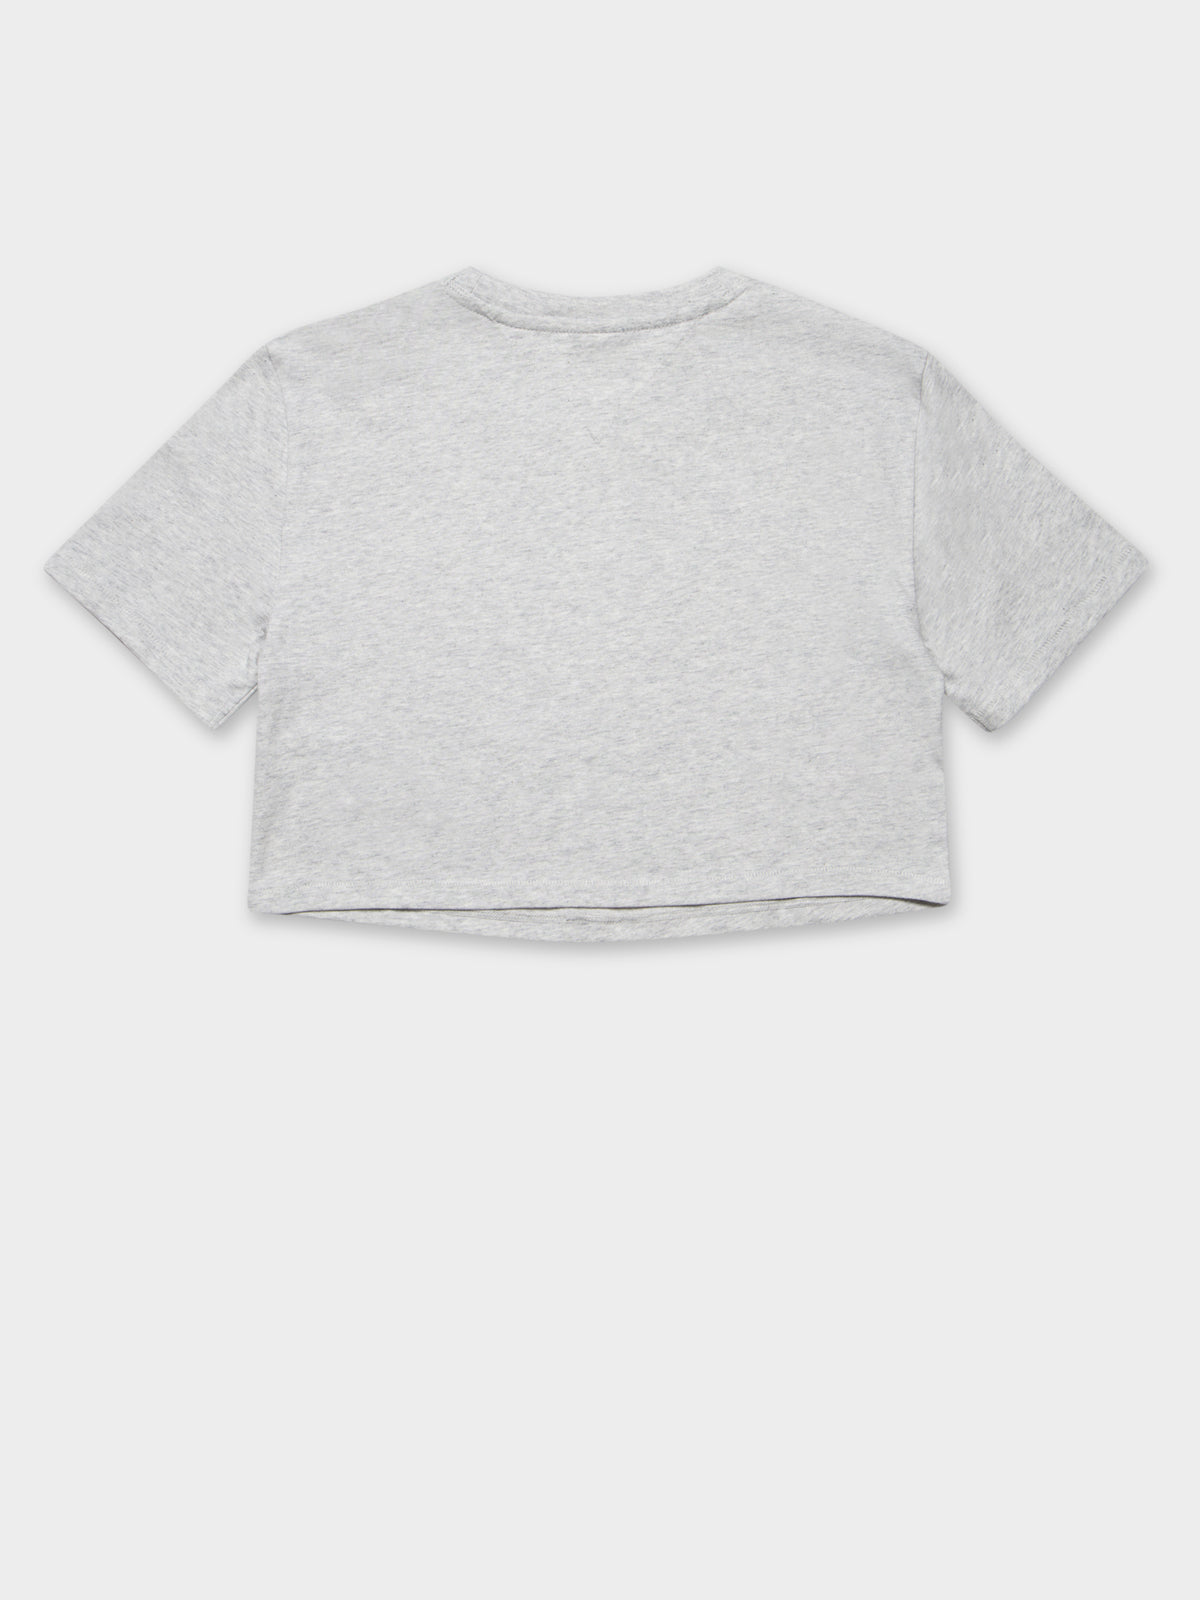 Repeat Logo Crop T-Shirt in Silver Grey